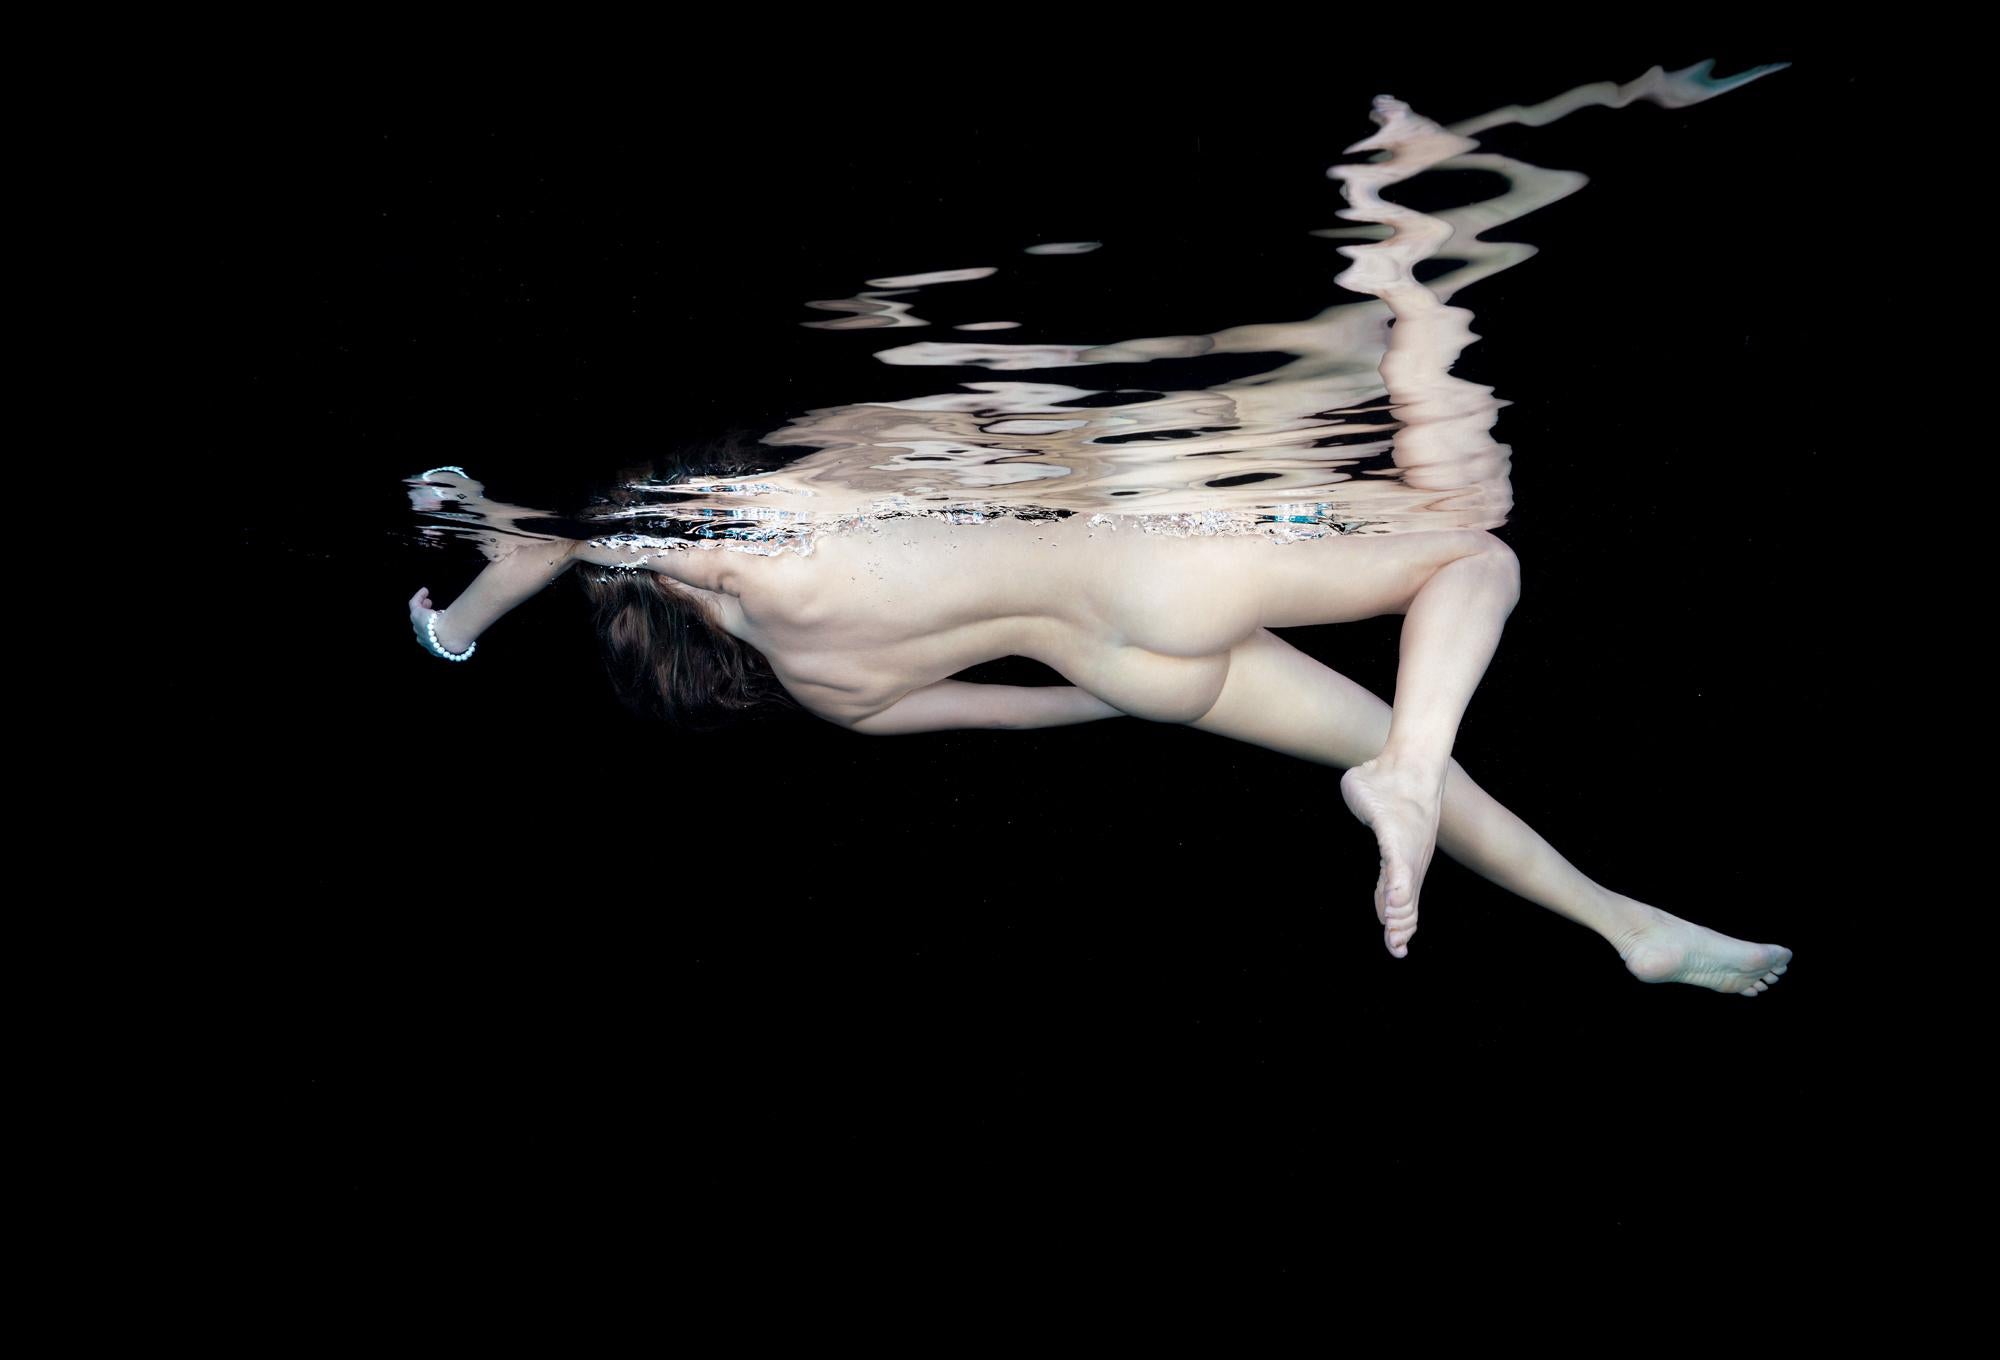 Alex Sher Nude Photograph - Porcelain II - underwater nude photo - print on aluminum 8 x 12"